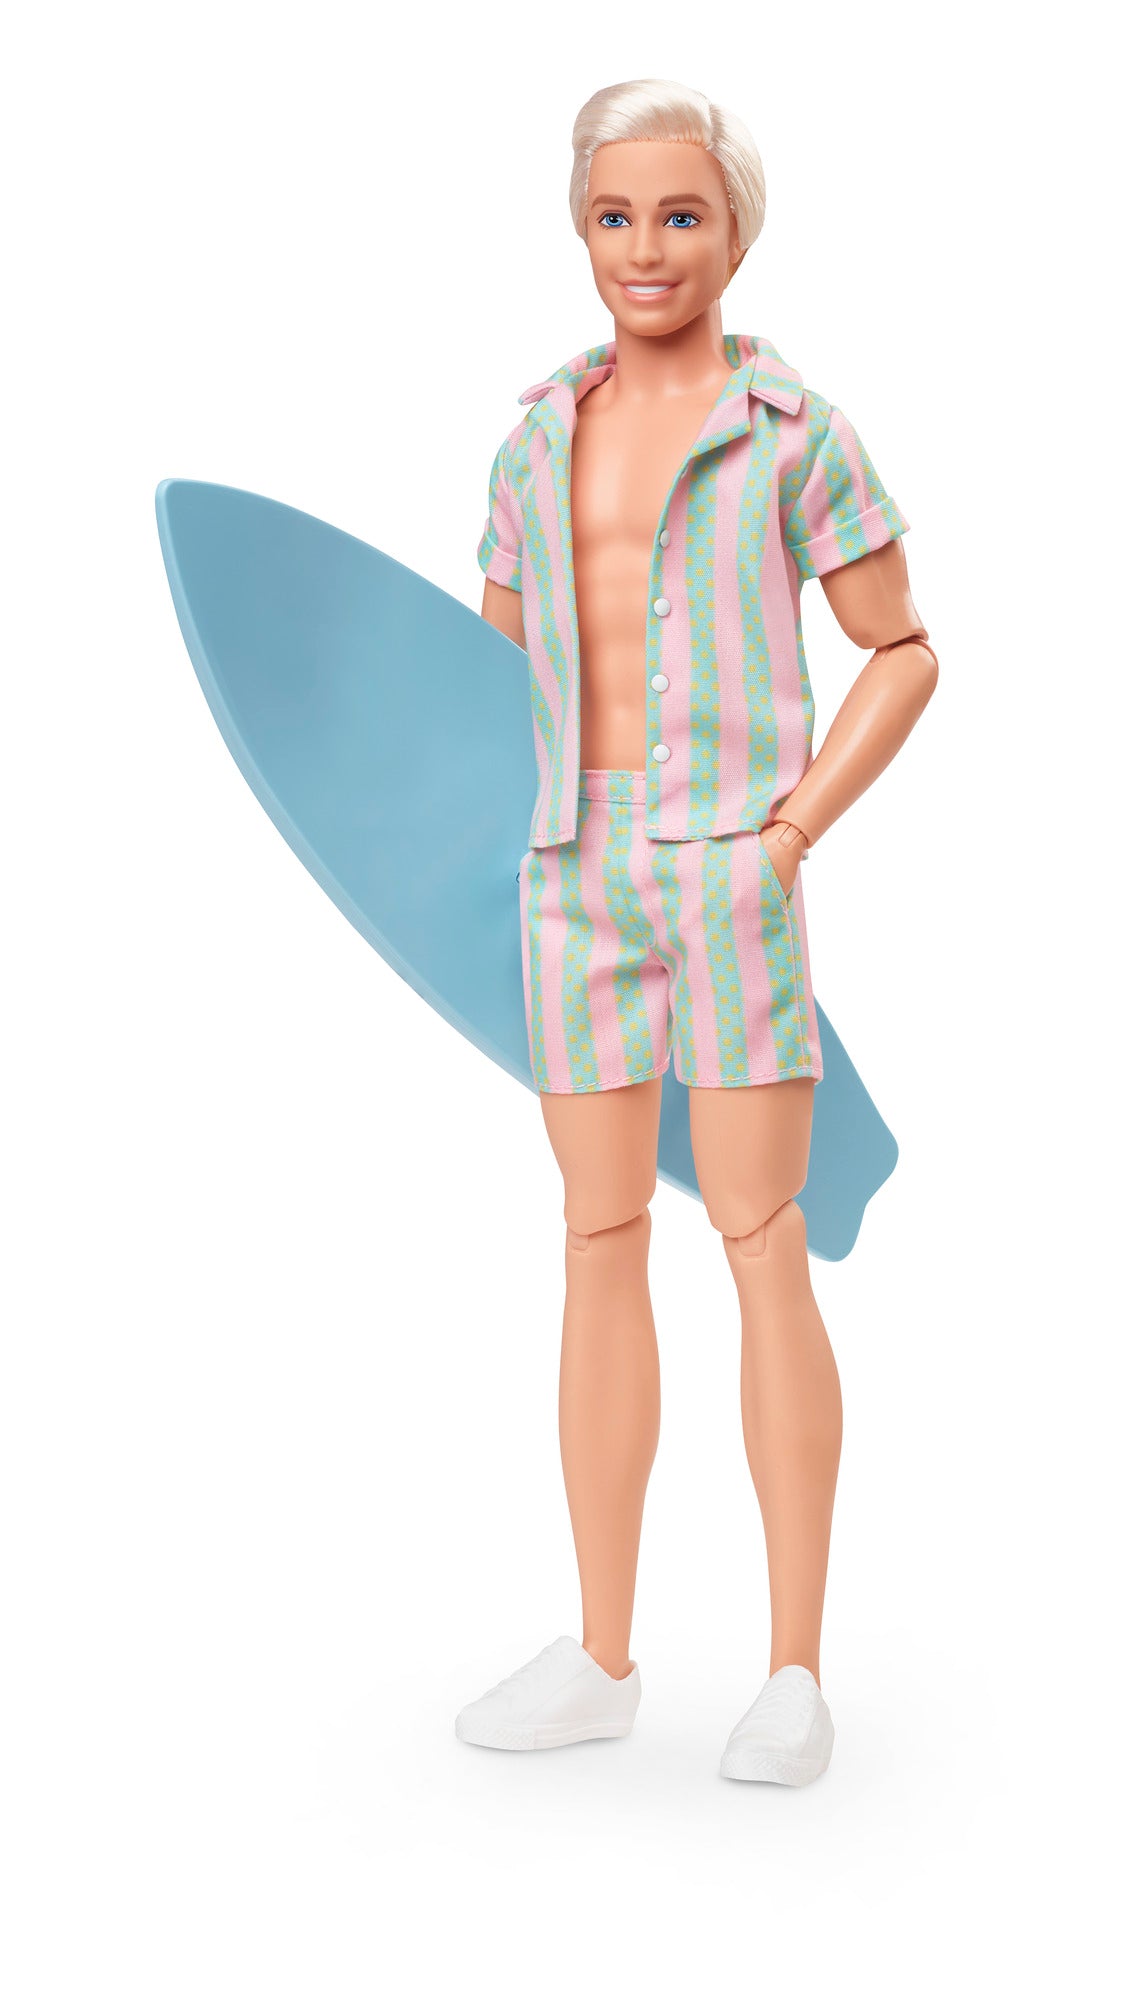 Barbie Movie Ken Doll Wearing Pastel Striped Beach Matching Set